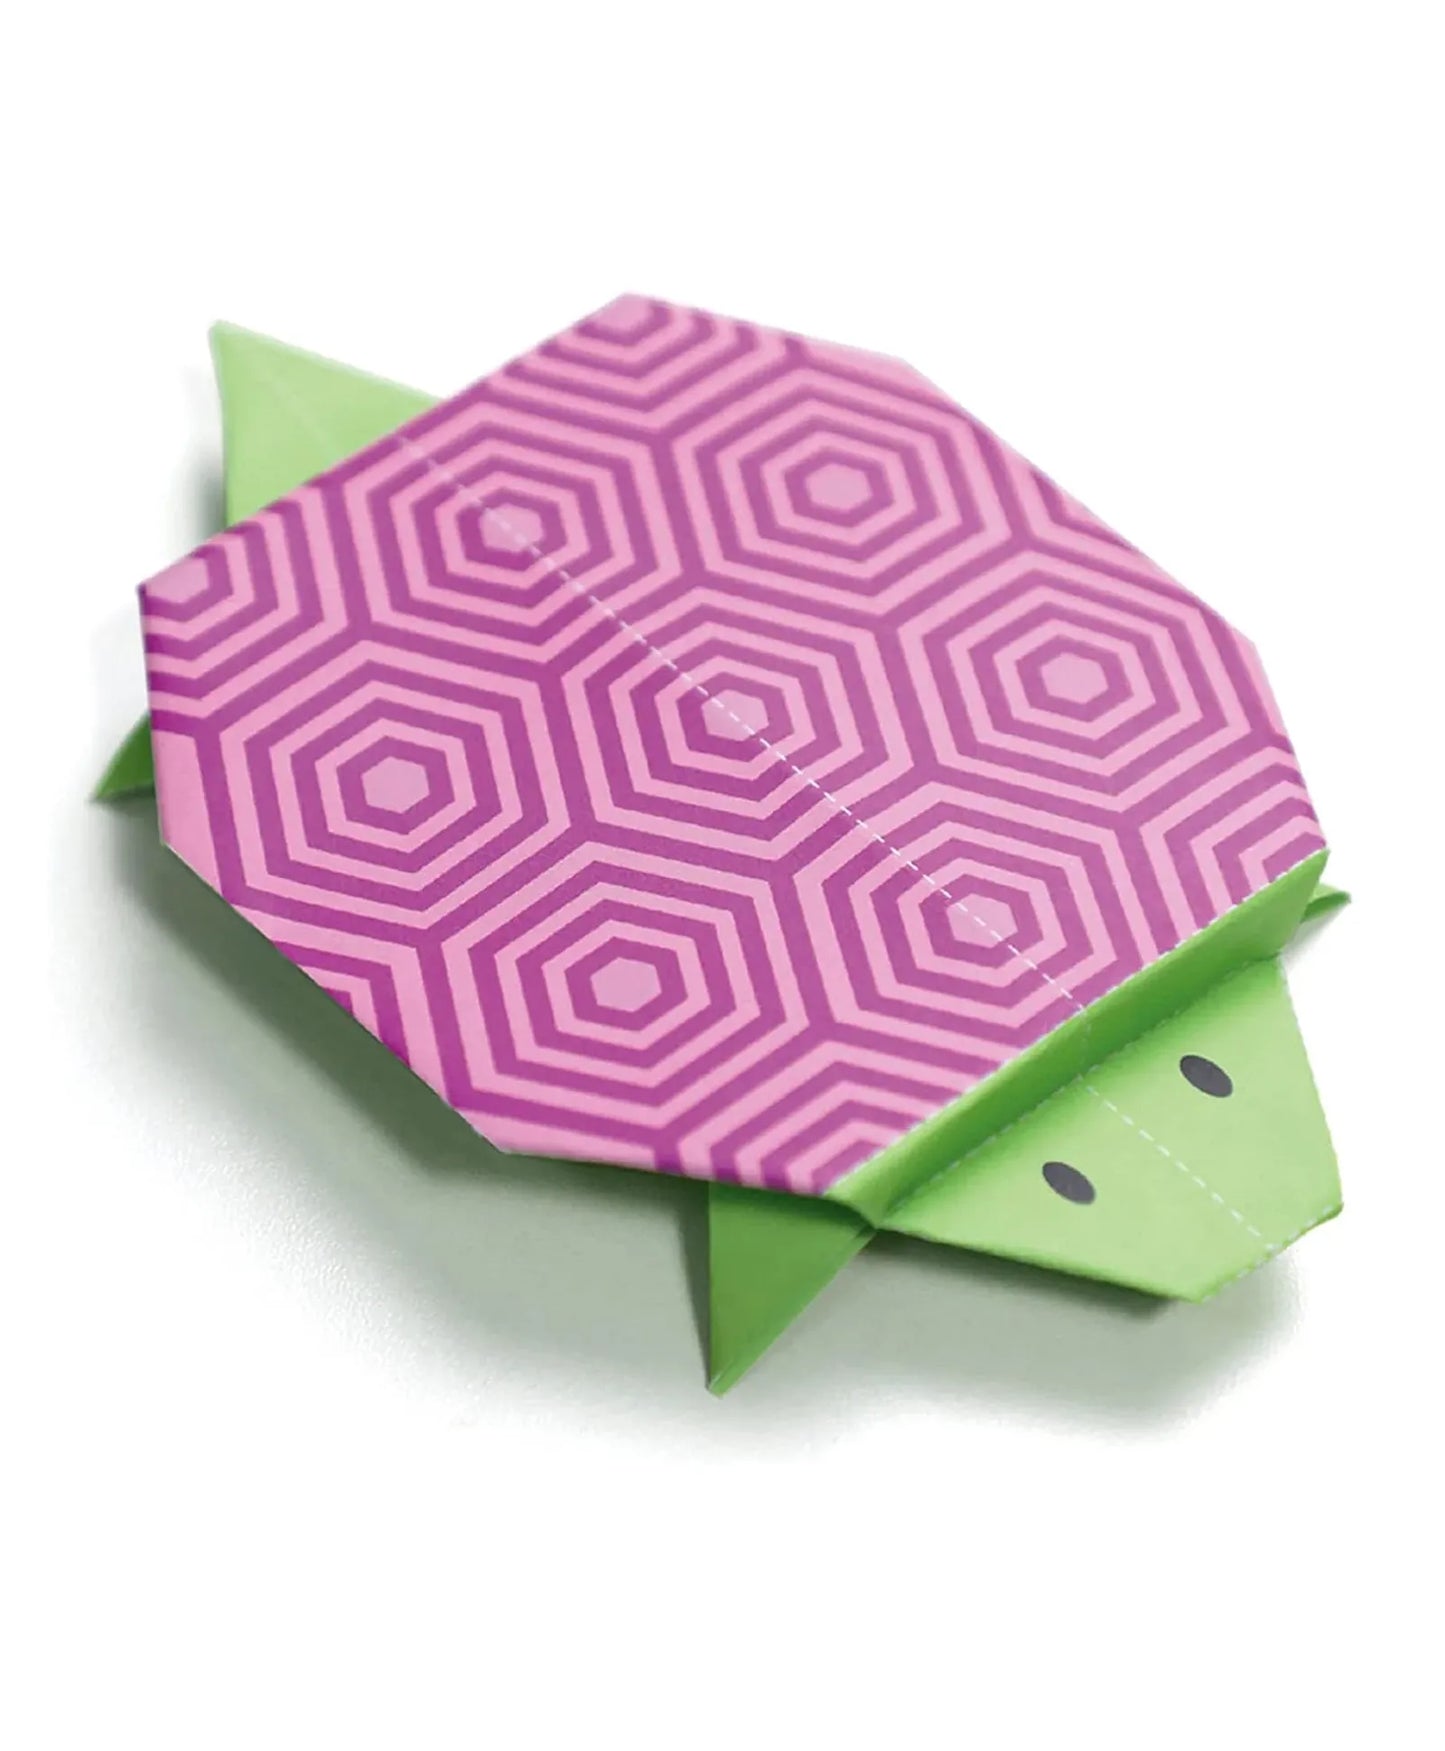 Avenir Origami Create My Own Kit - Pets - Laadlee